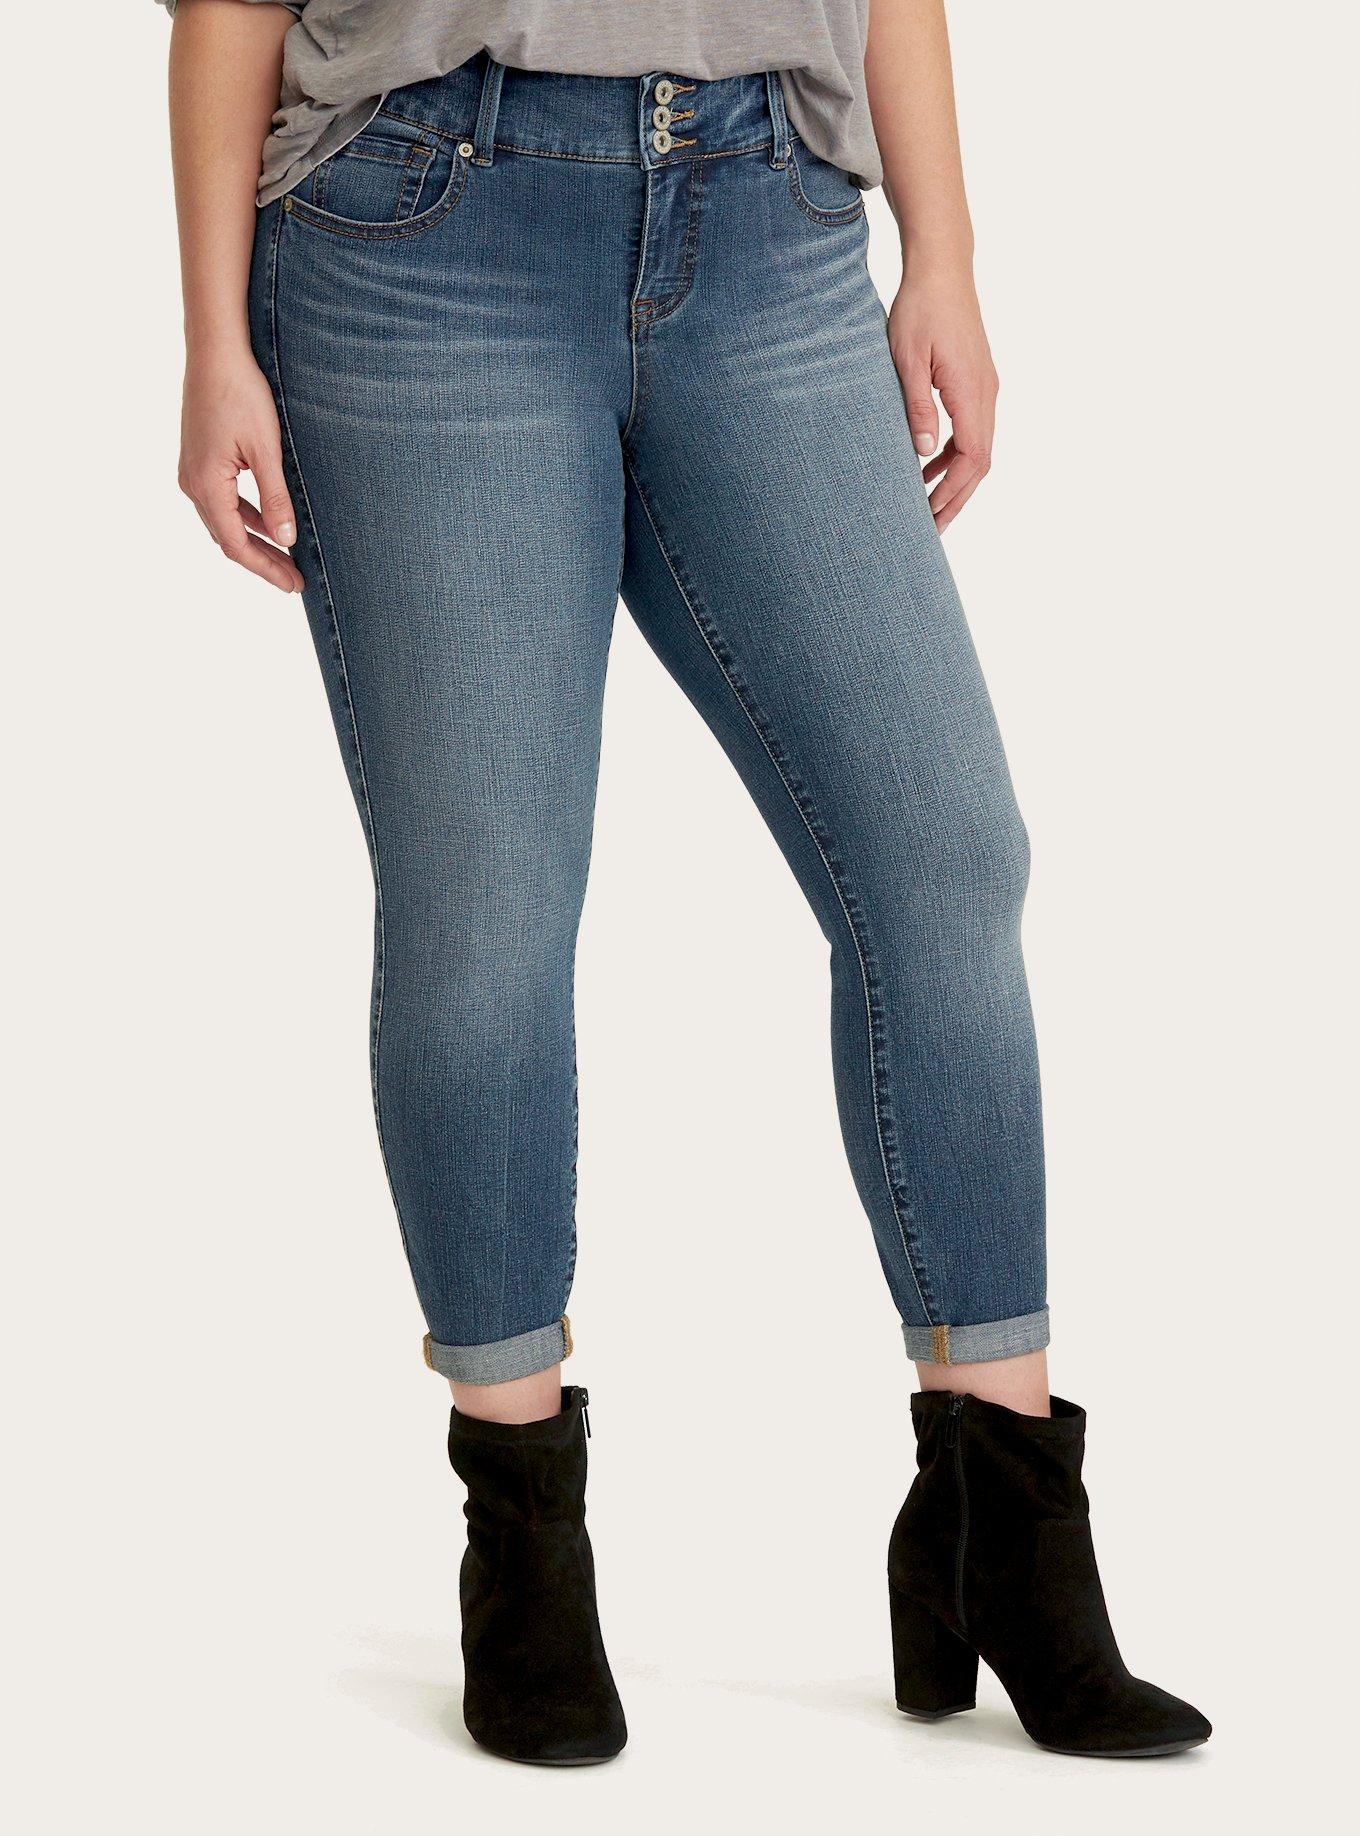 TORRID Plus Size 22 Crop Jegging - Super Stretch Medium Wash, Capris Jeans  new